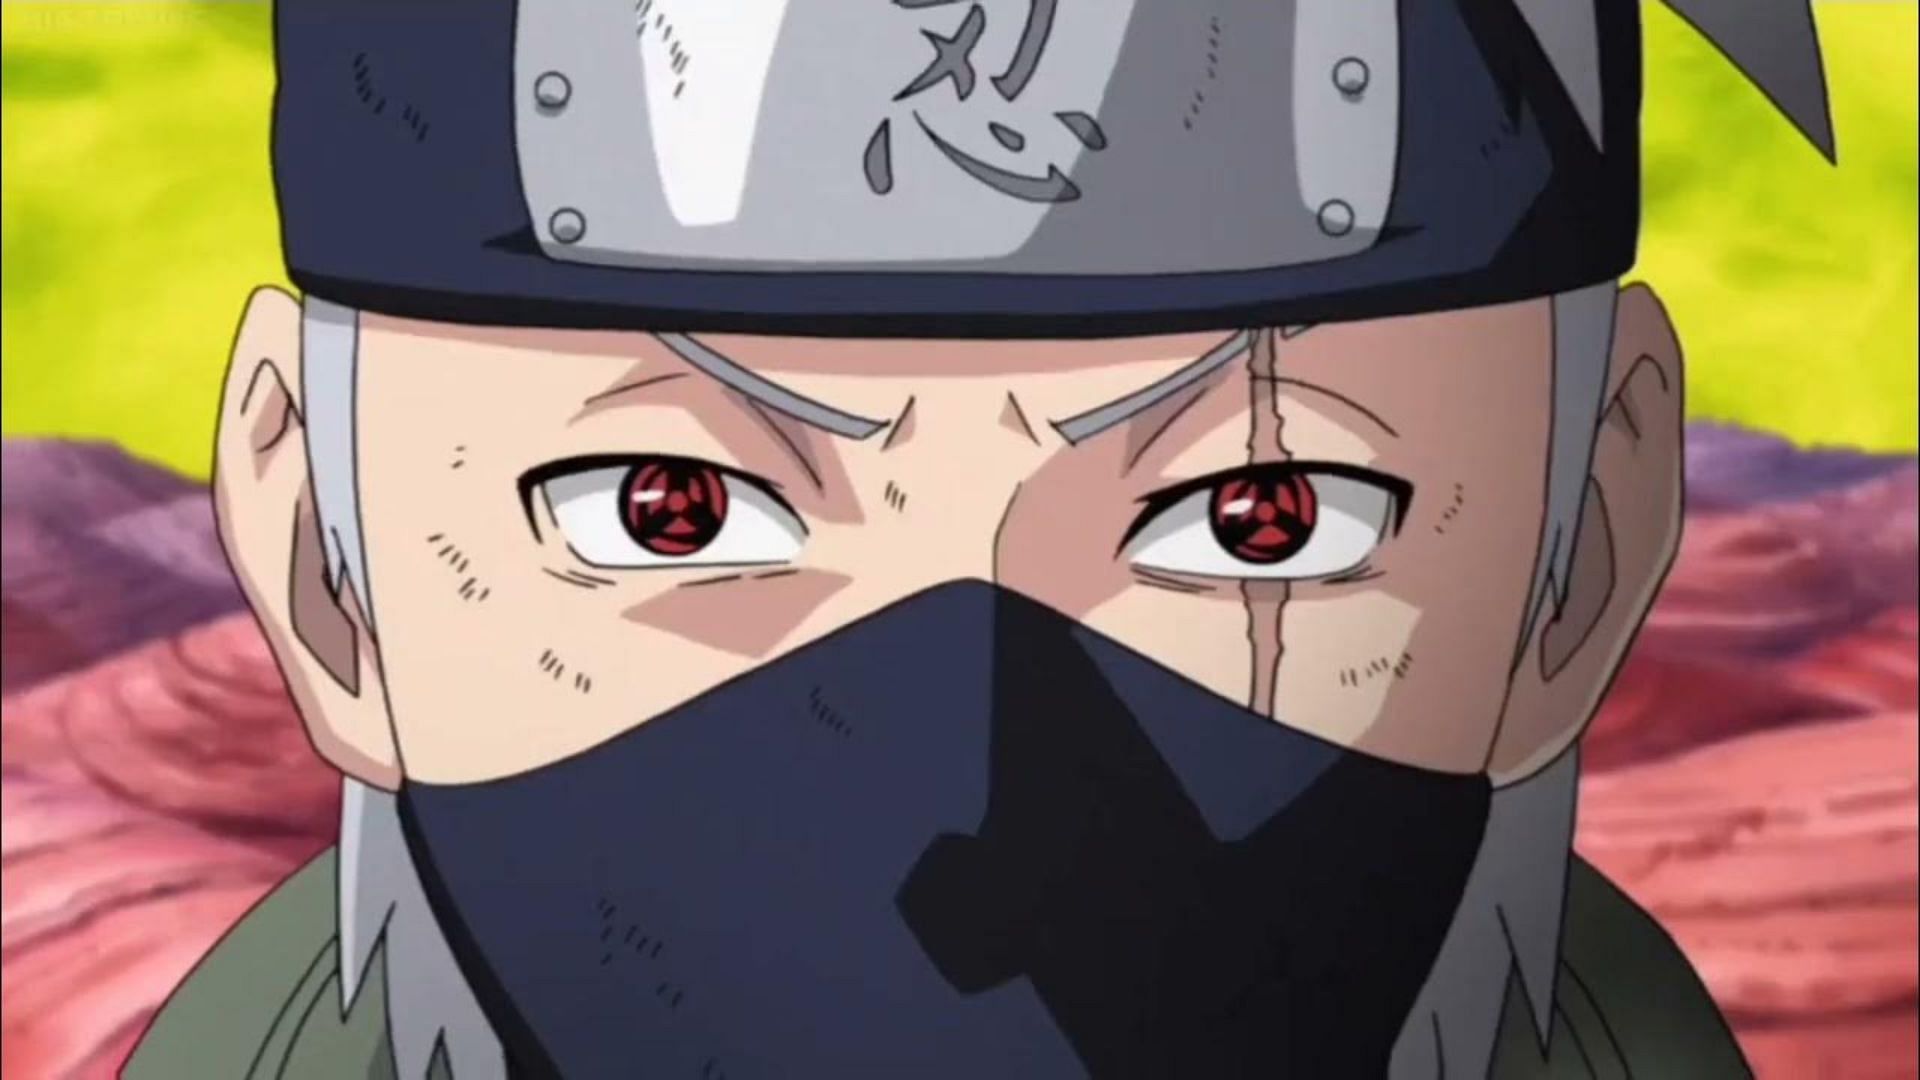 Kakashi using two Sharingan eyes in the Naruto Shippuden anime (Image via Studio Pierrot)